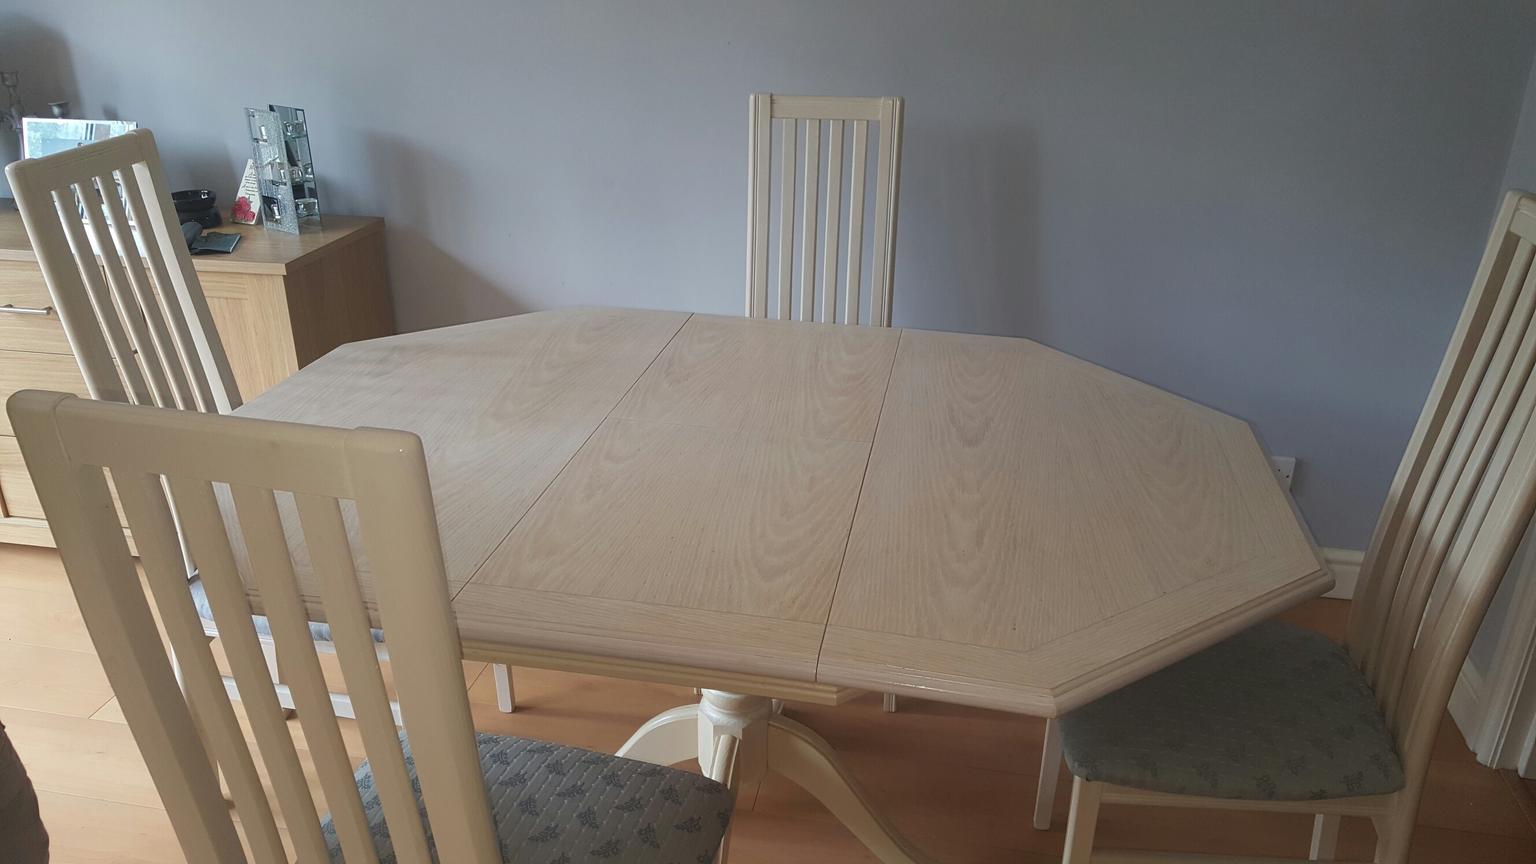 Limed Oak Dining Table In B28 Birmingham For 90 00 For Sale Shpock